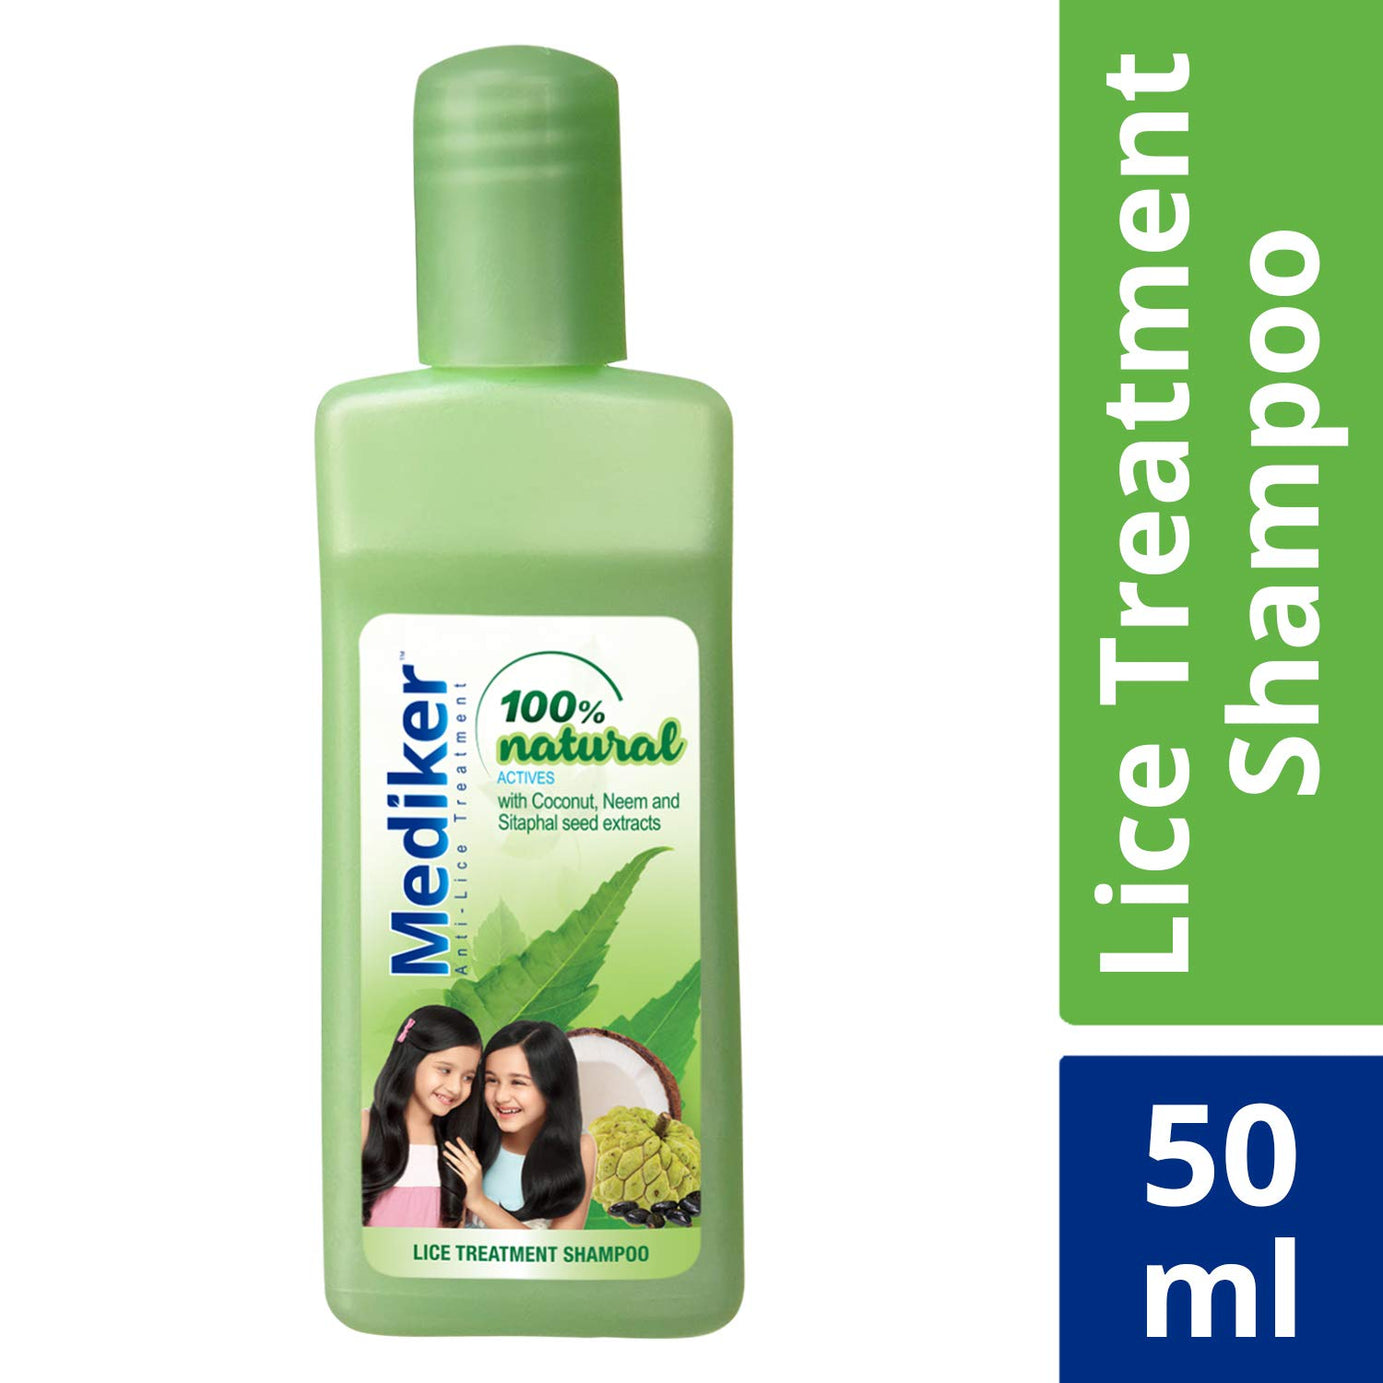 Shop Mediker Anti Lice Shampoo 50ml at price 50.00 from Mediker Online - Ayush Care